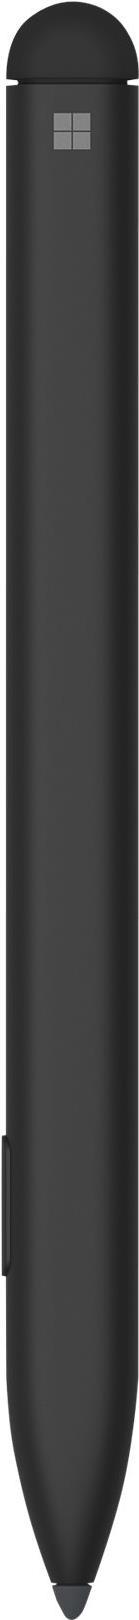 Microsoft Surface Slim Pen (LLM-00006)